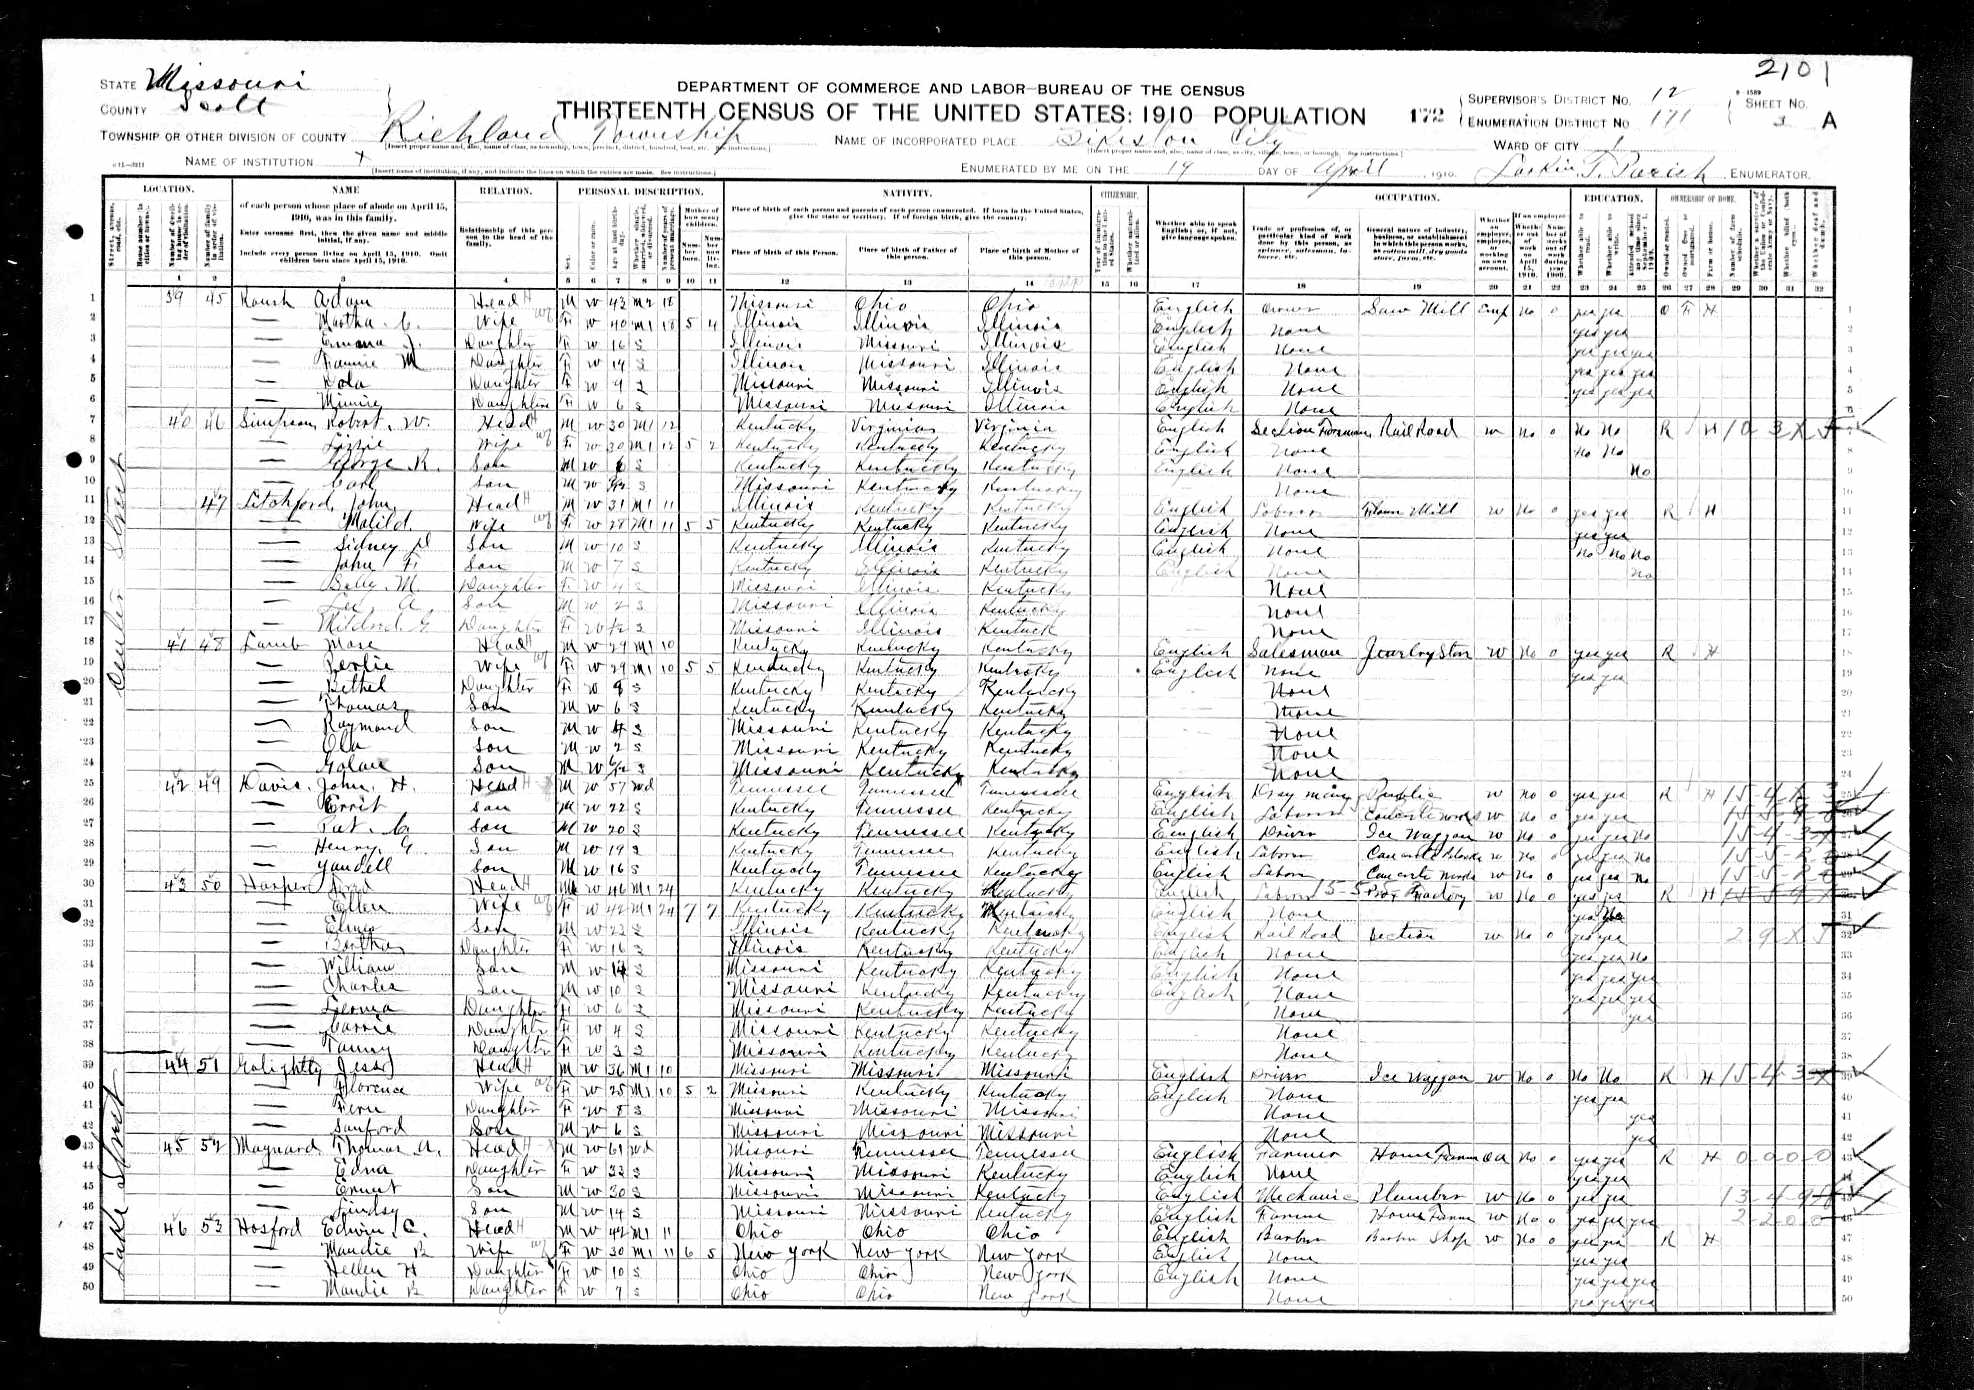 Adam Roush, 1910 Scott County, Missouri, census